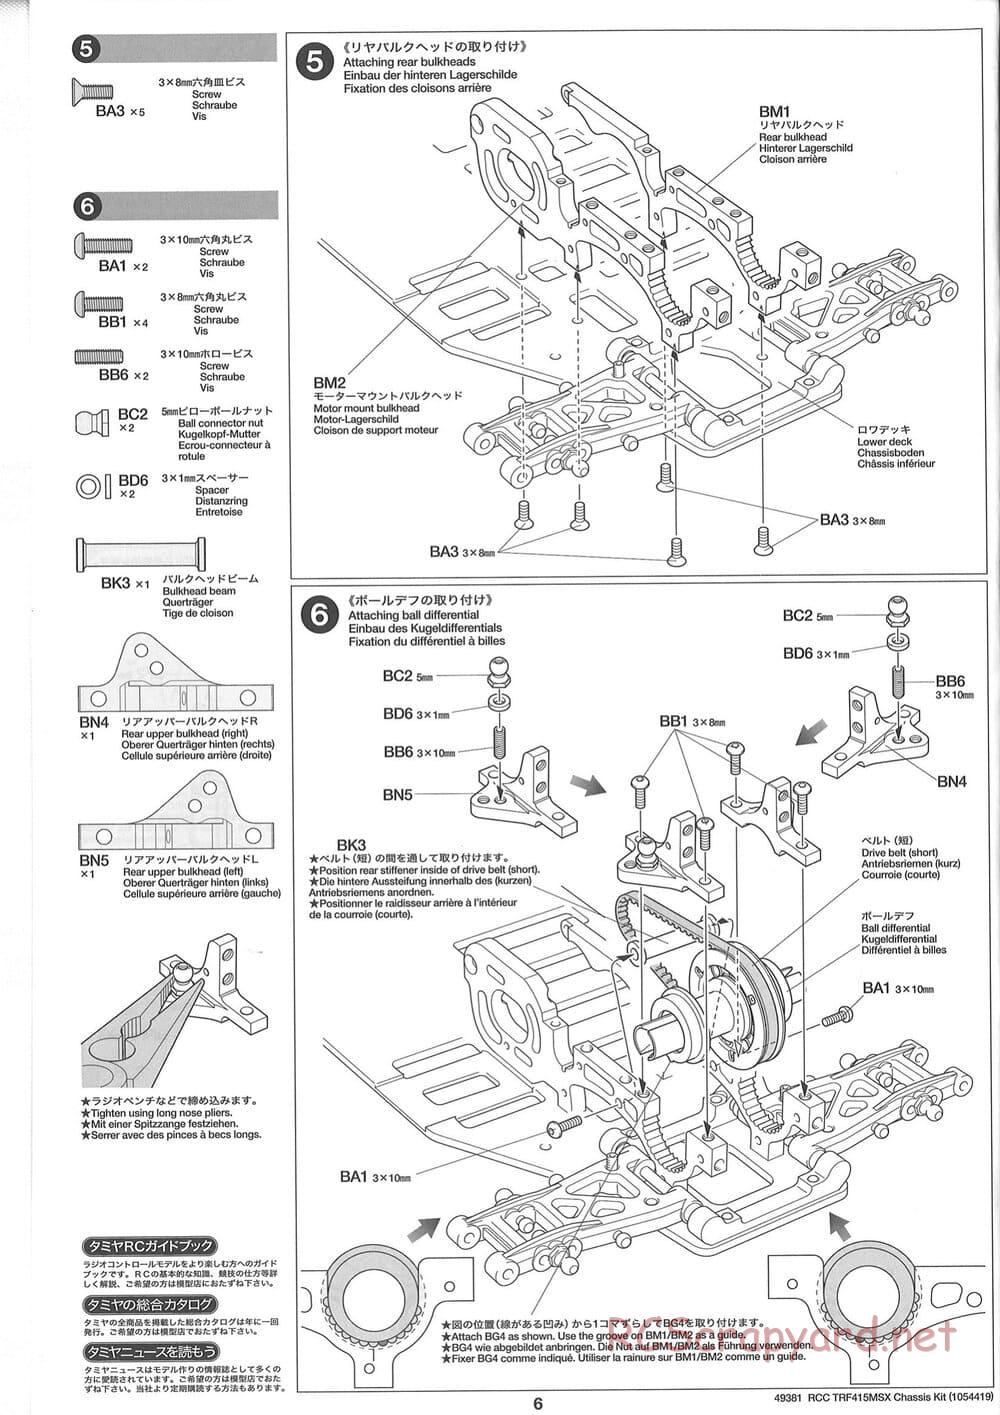 Tamiya - TRF415-MSX Chassis - Manual - Page 6